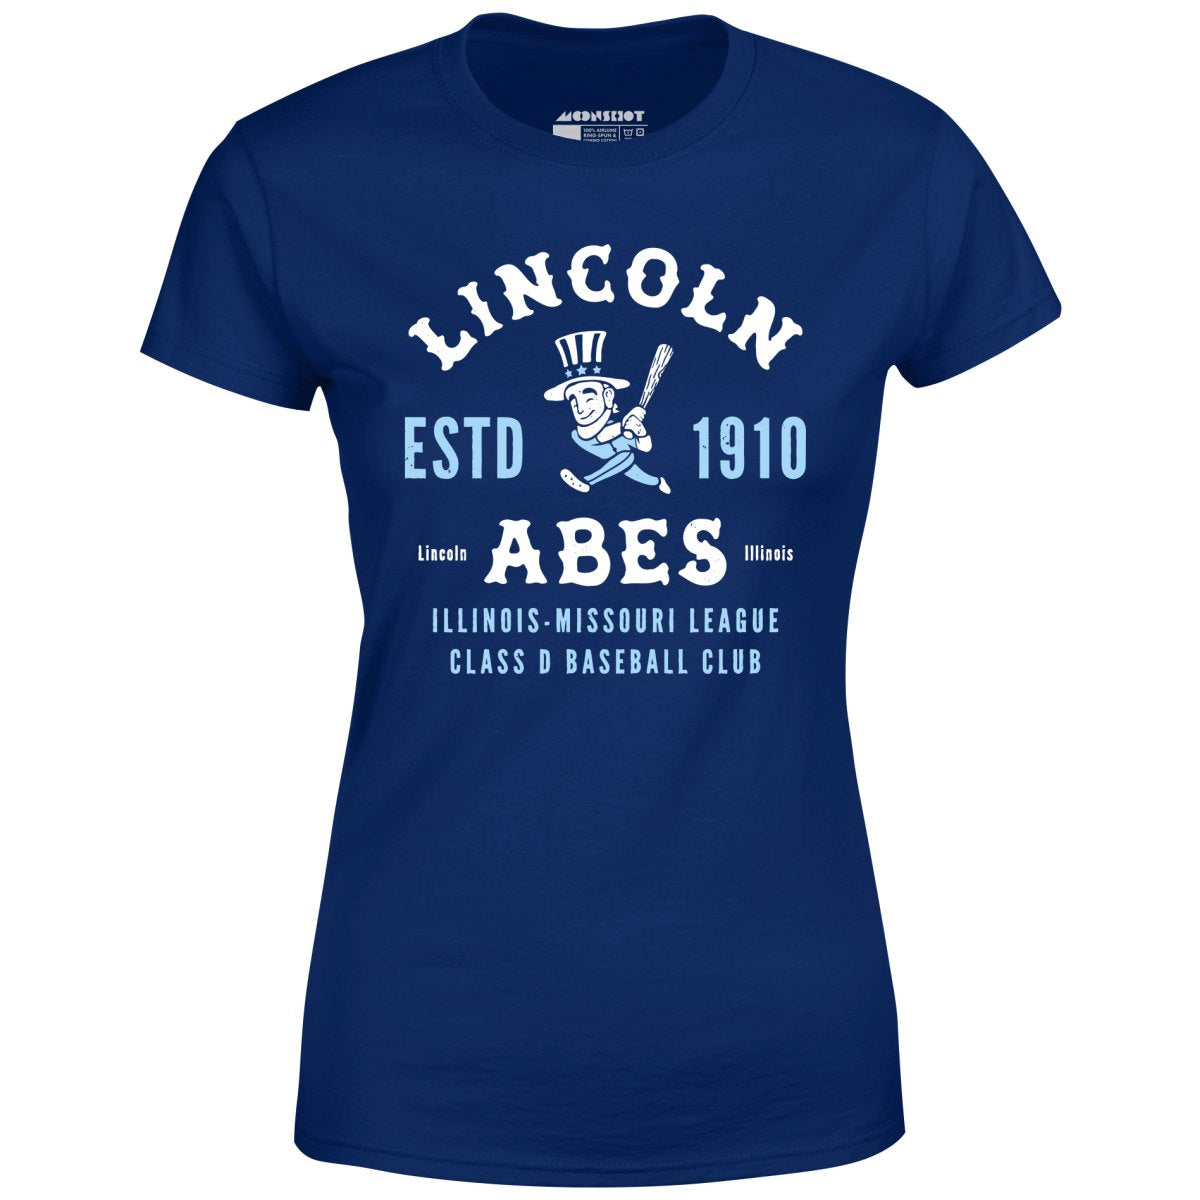 Lincoln Abes - Illinois - Vintage Defunct Baseball Teams - Women's T-Shirt